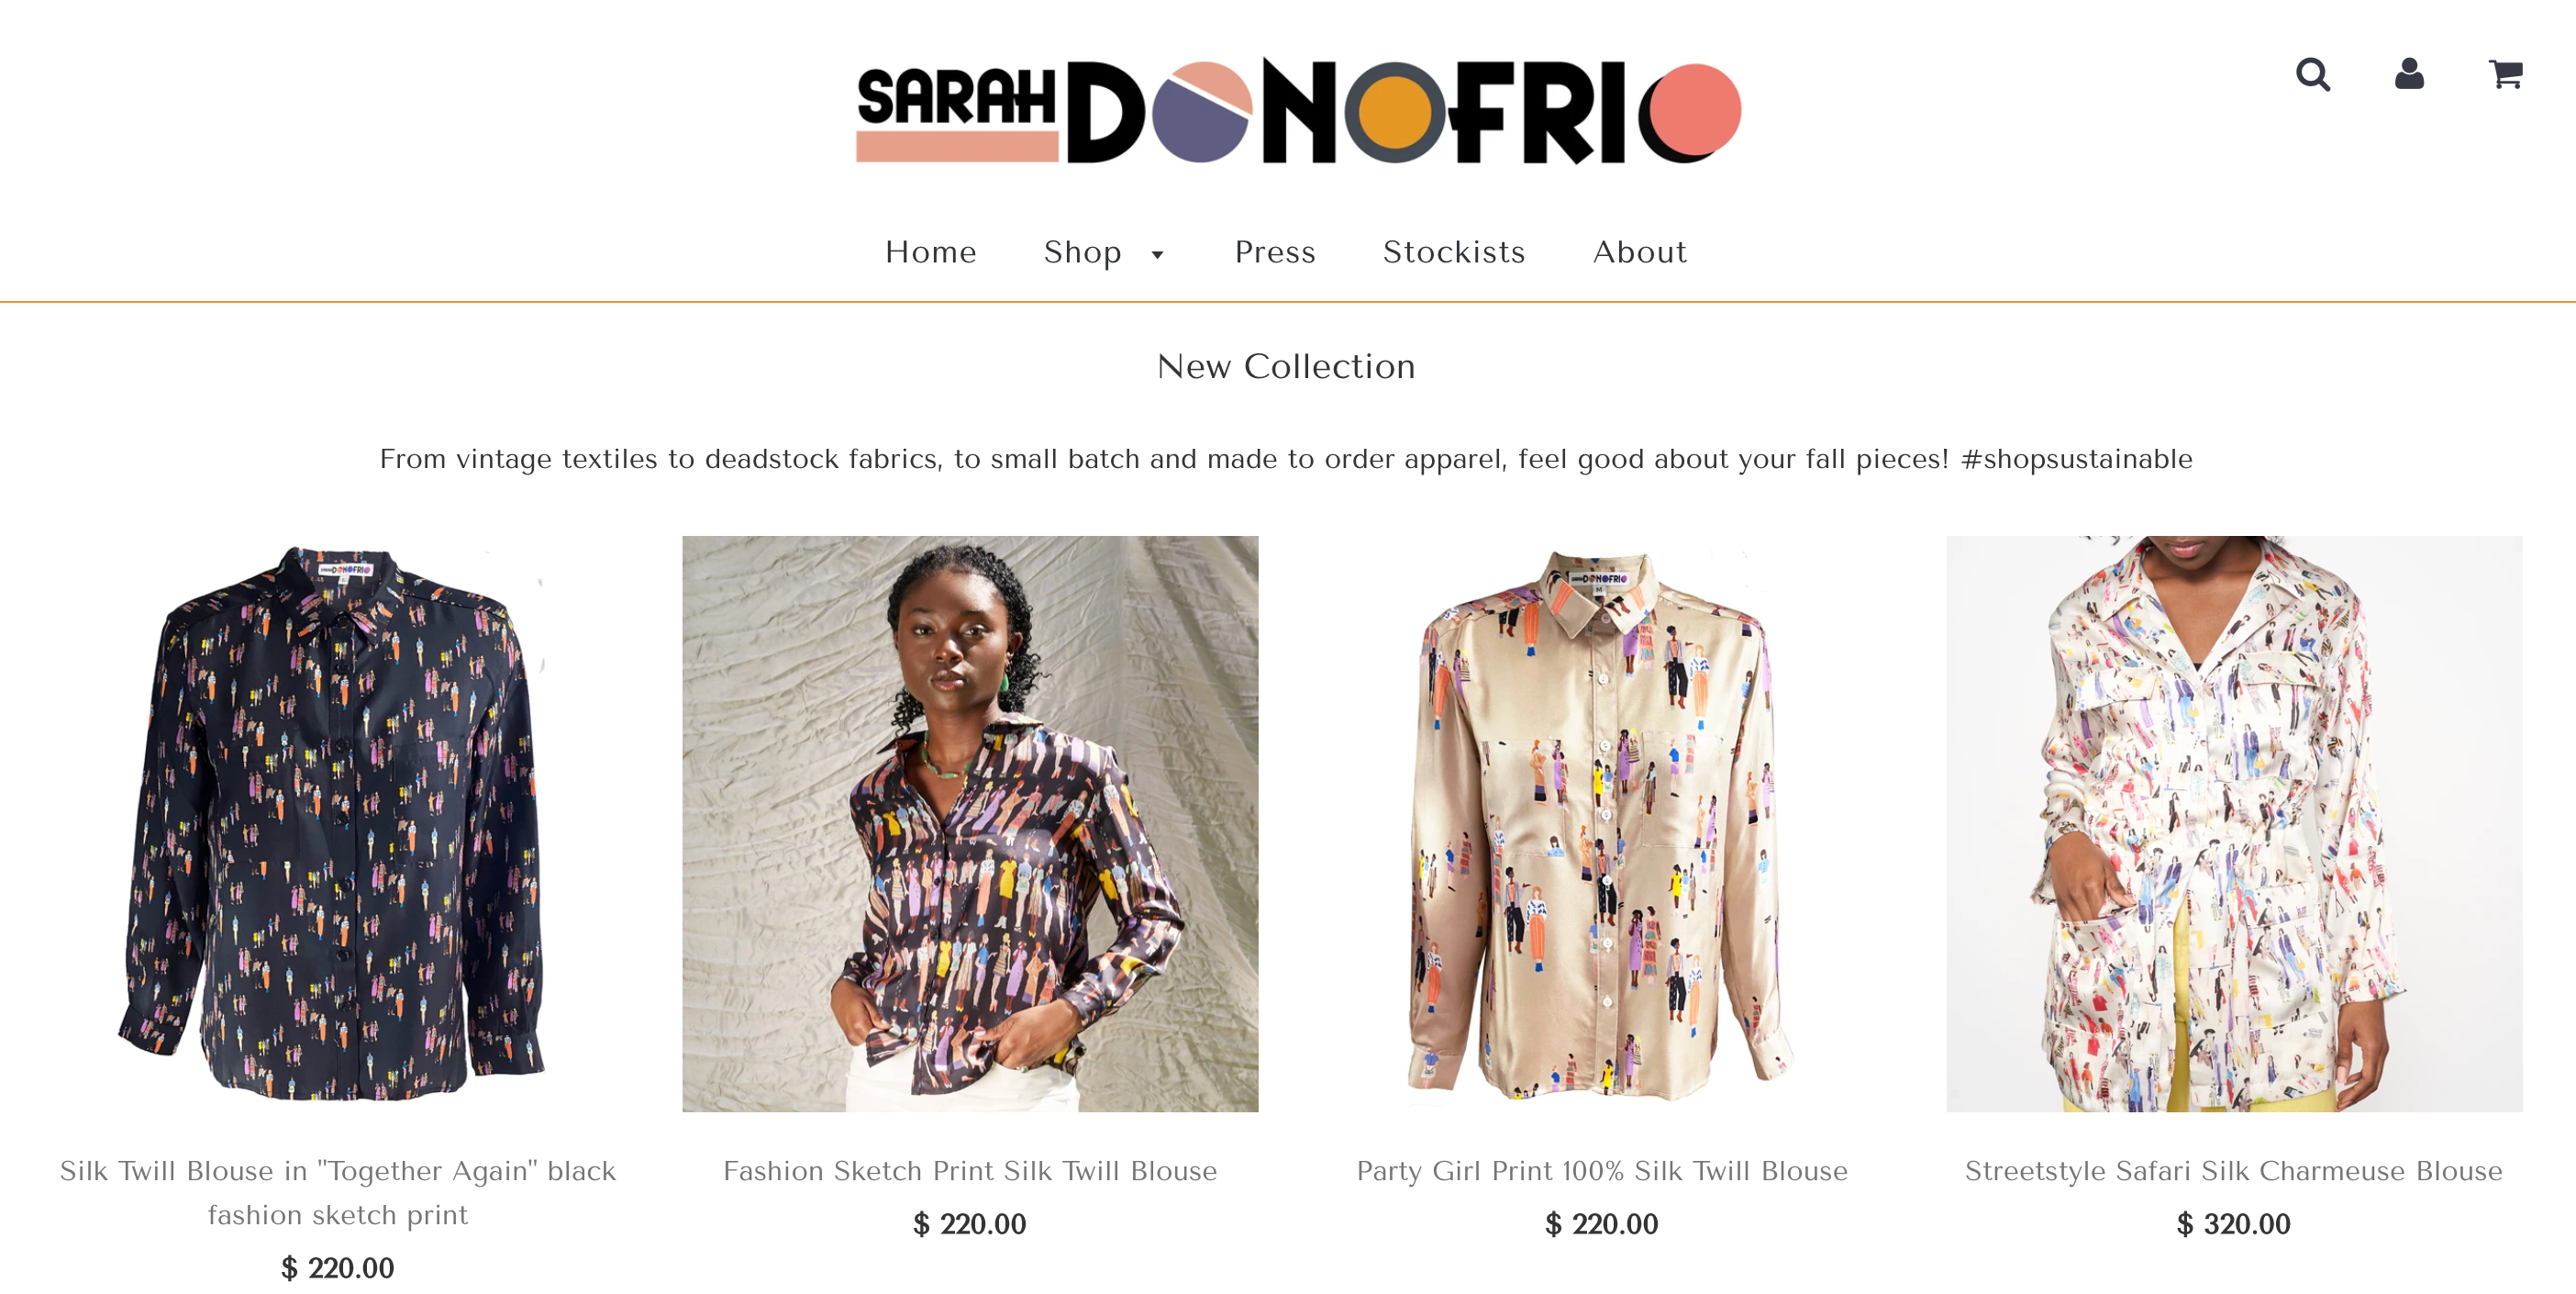 Screenshot of Sarah Donofrio's website home page